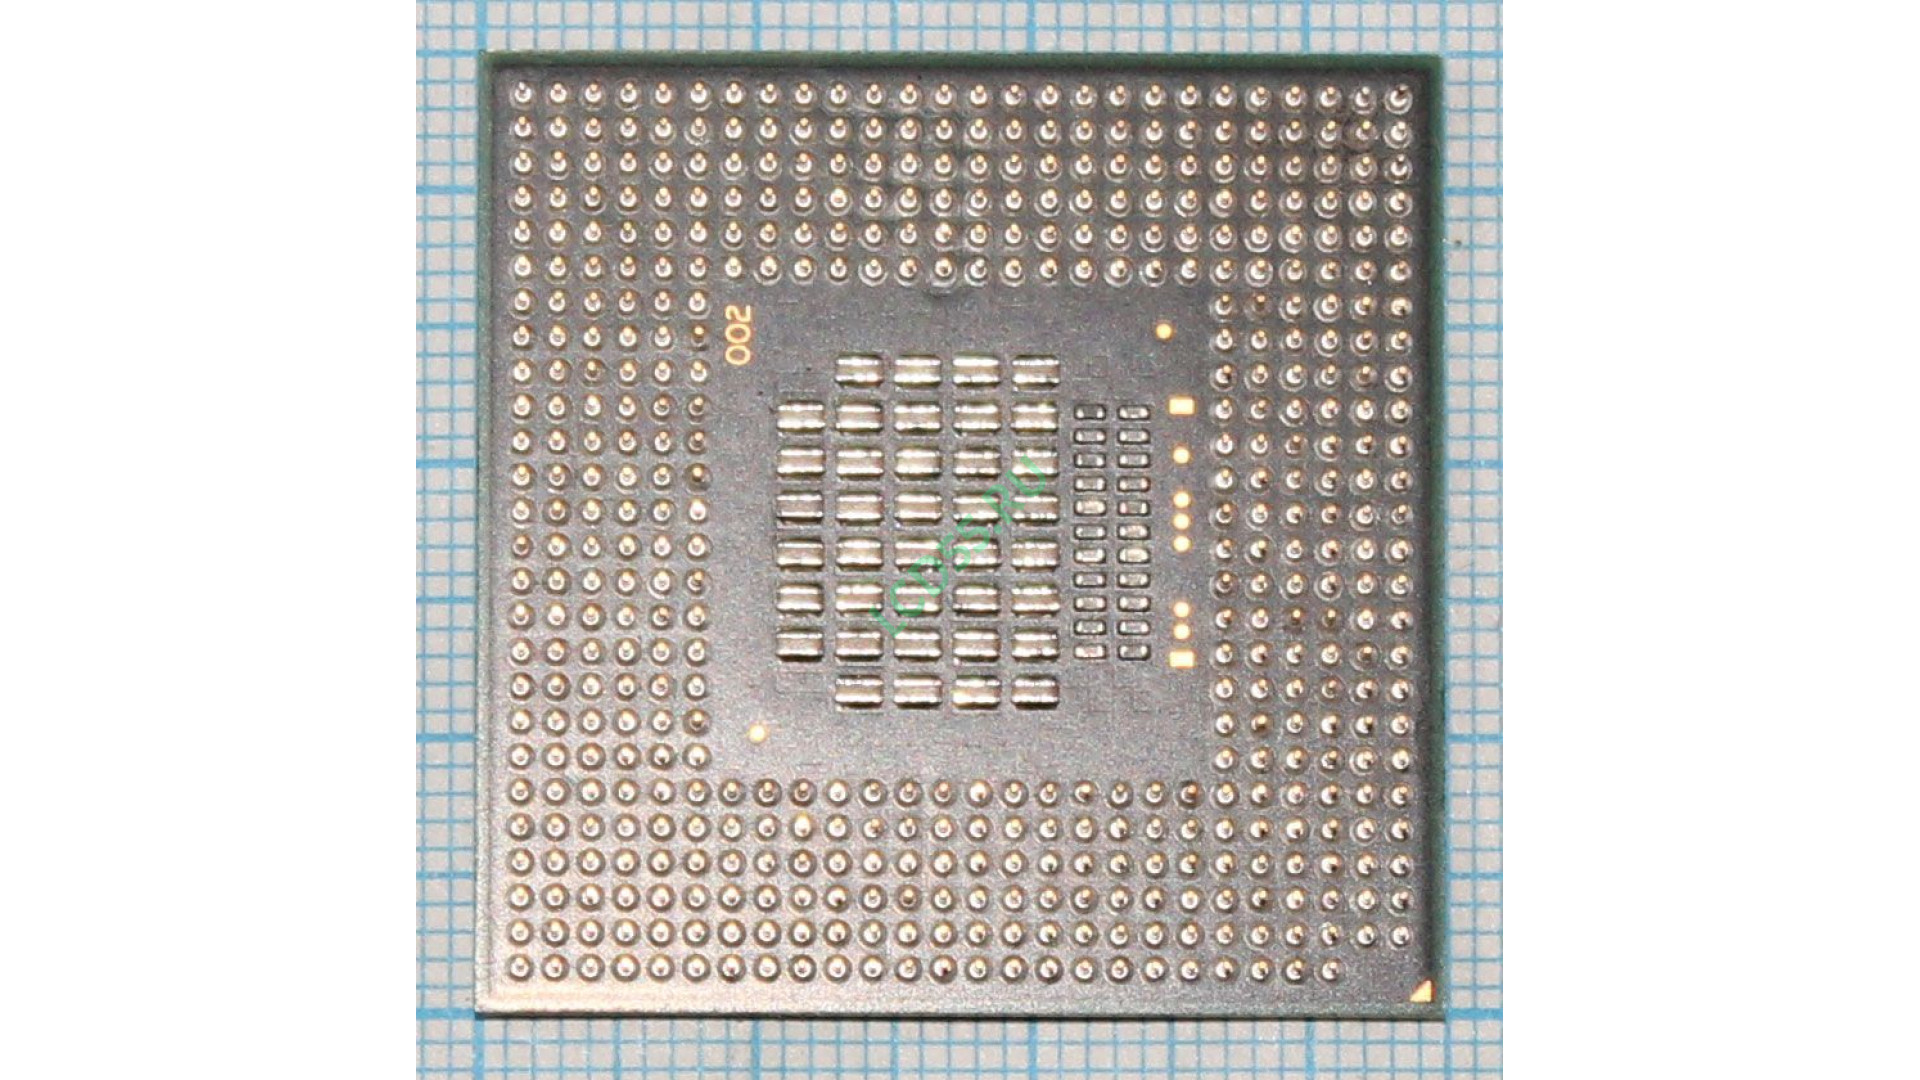 Intel Core 2 Duo T7500 (4M Cache, 2.20 GHz, 800 MHz FSB) (SLAF8) PBGA479, PPGA478